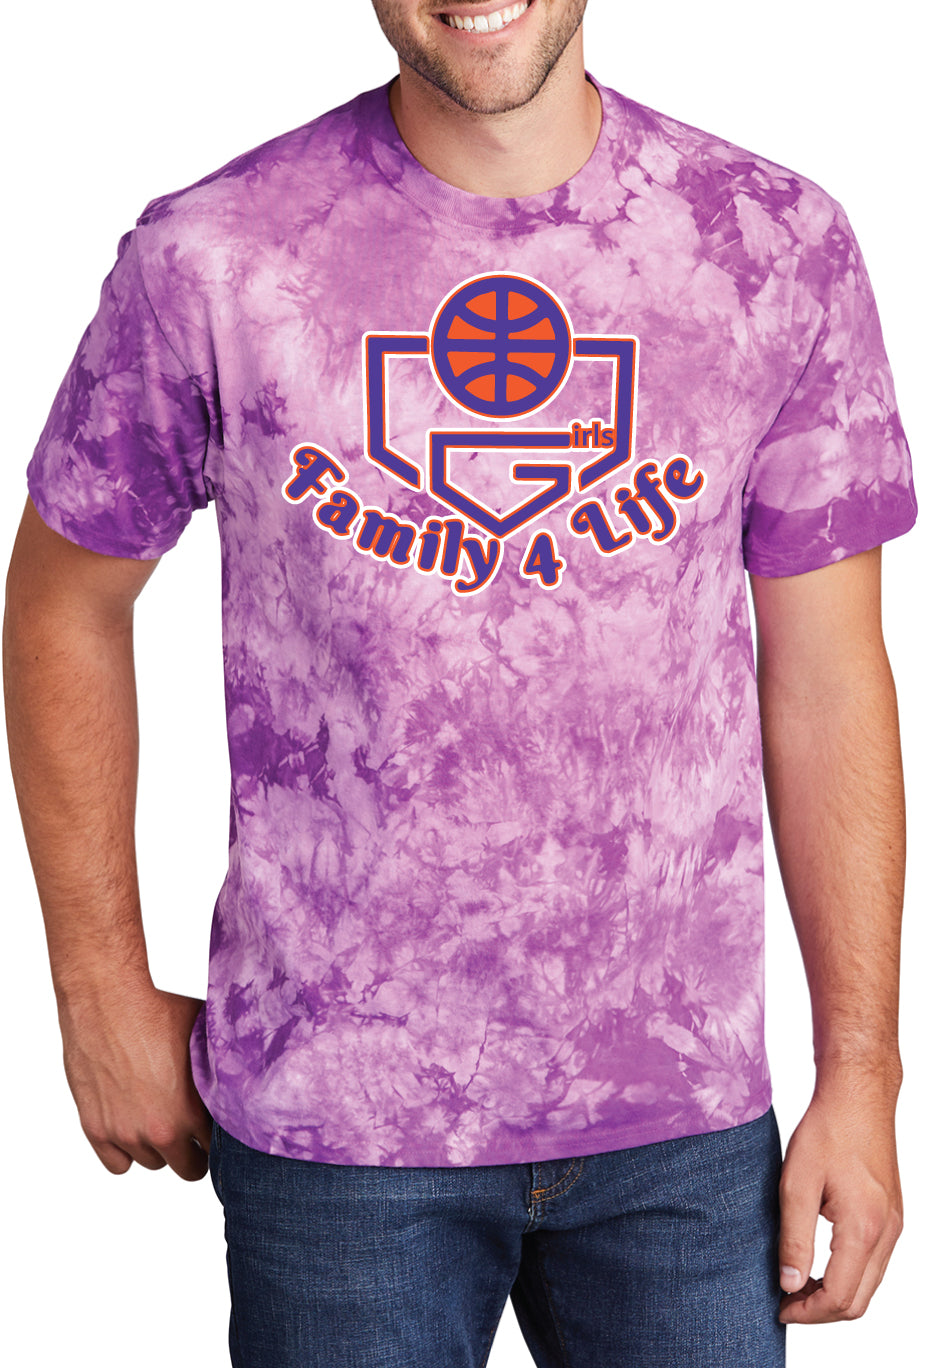 Crystal Purple Tie Dye Fam 4 Life Cotton T-Shirt